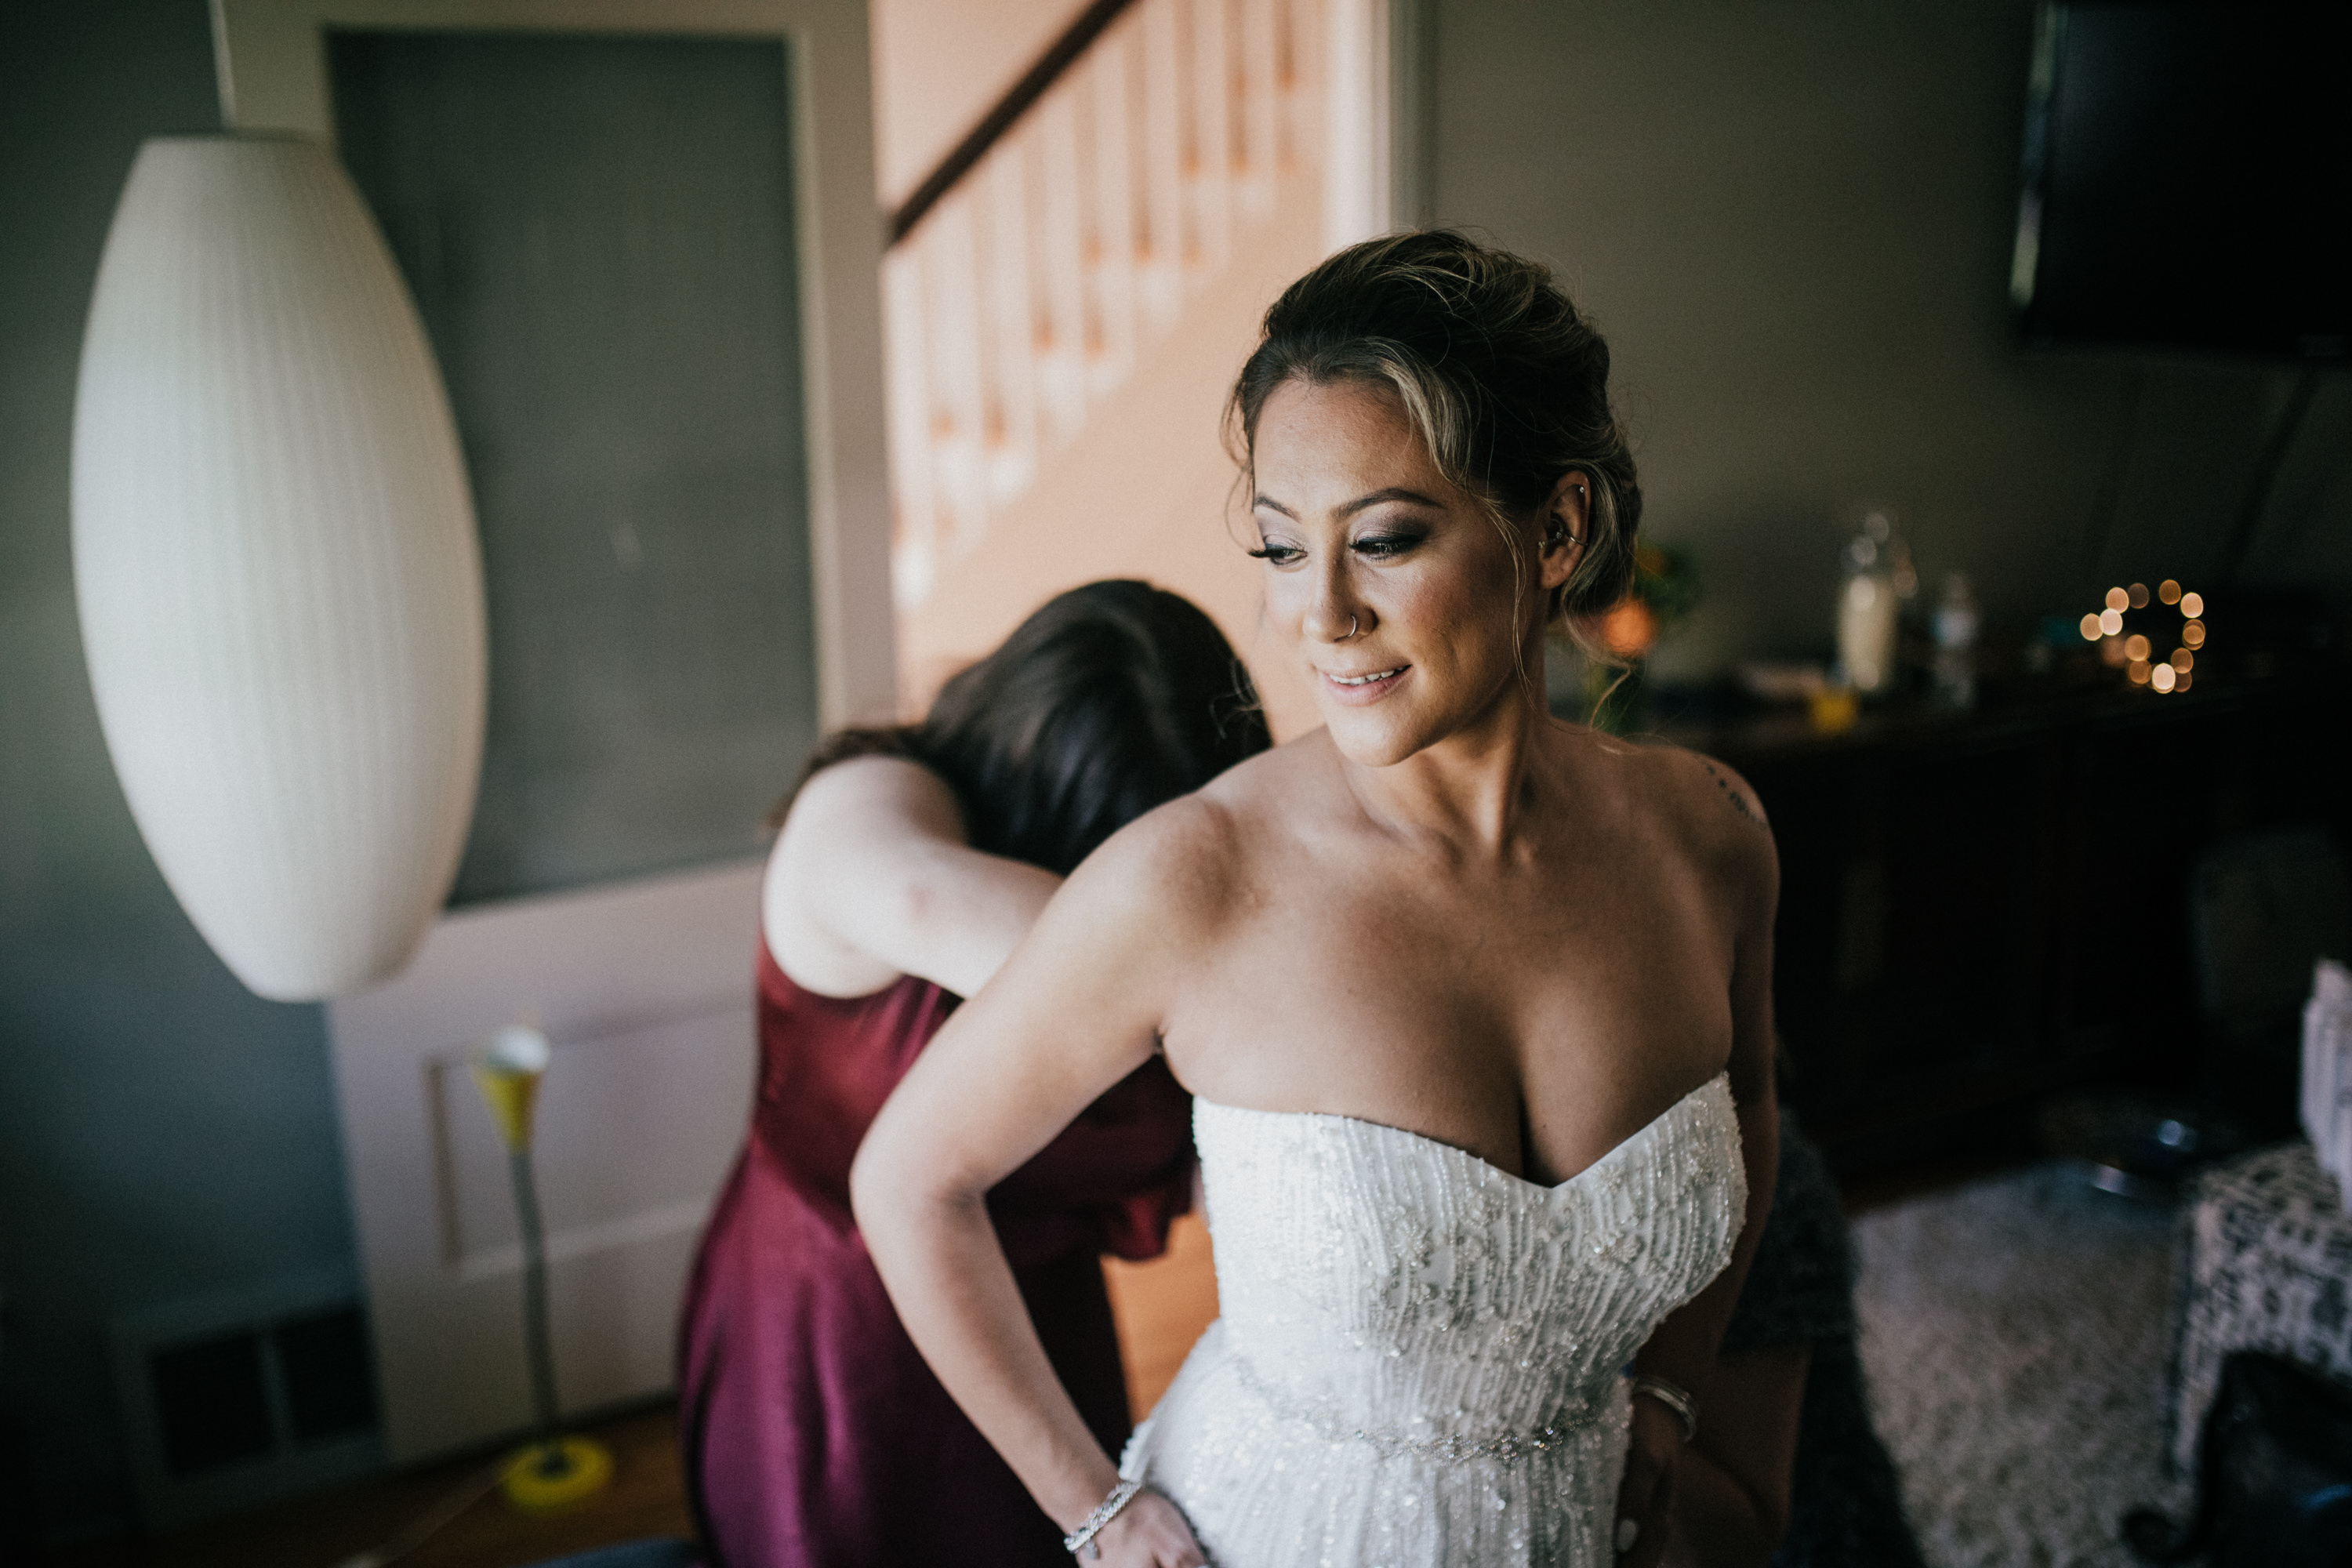 bride getting into dress